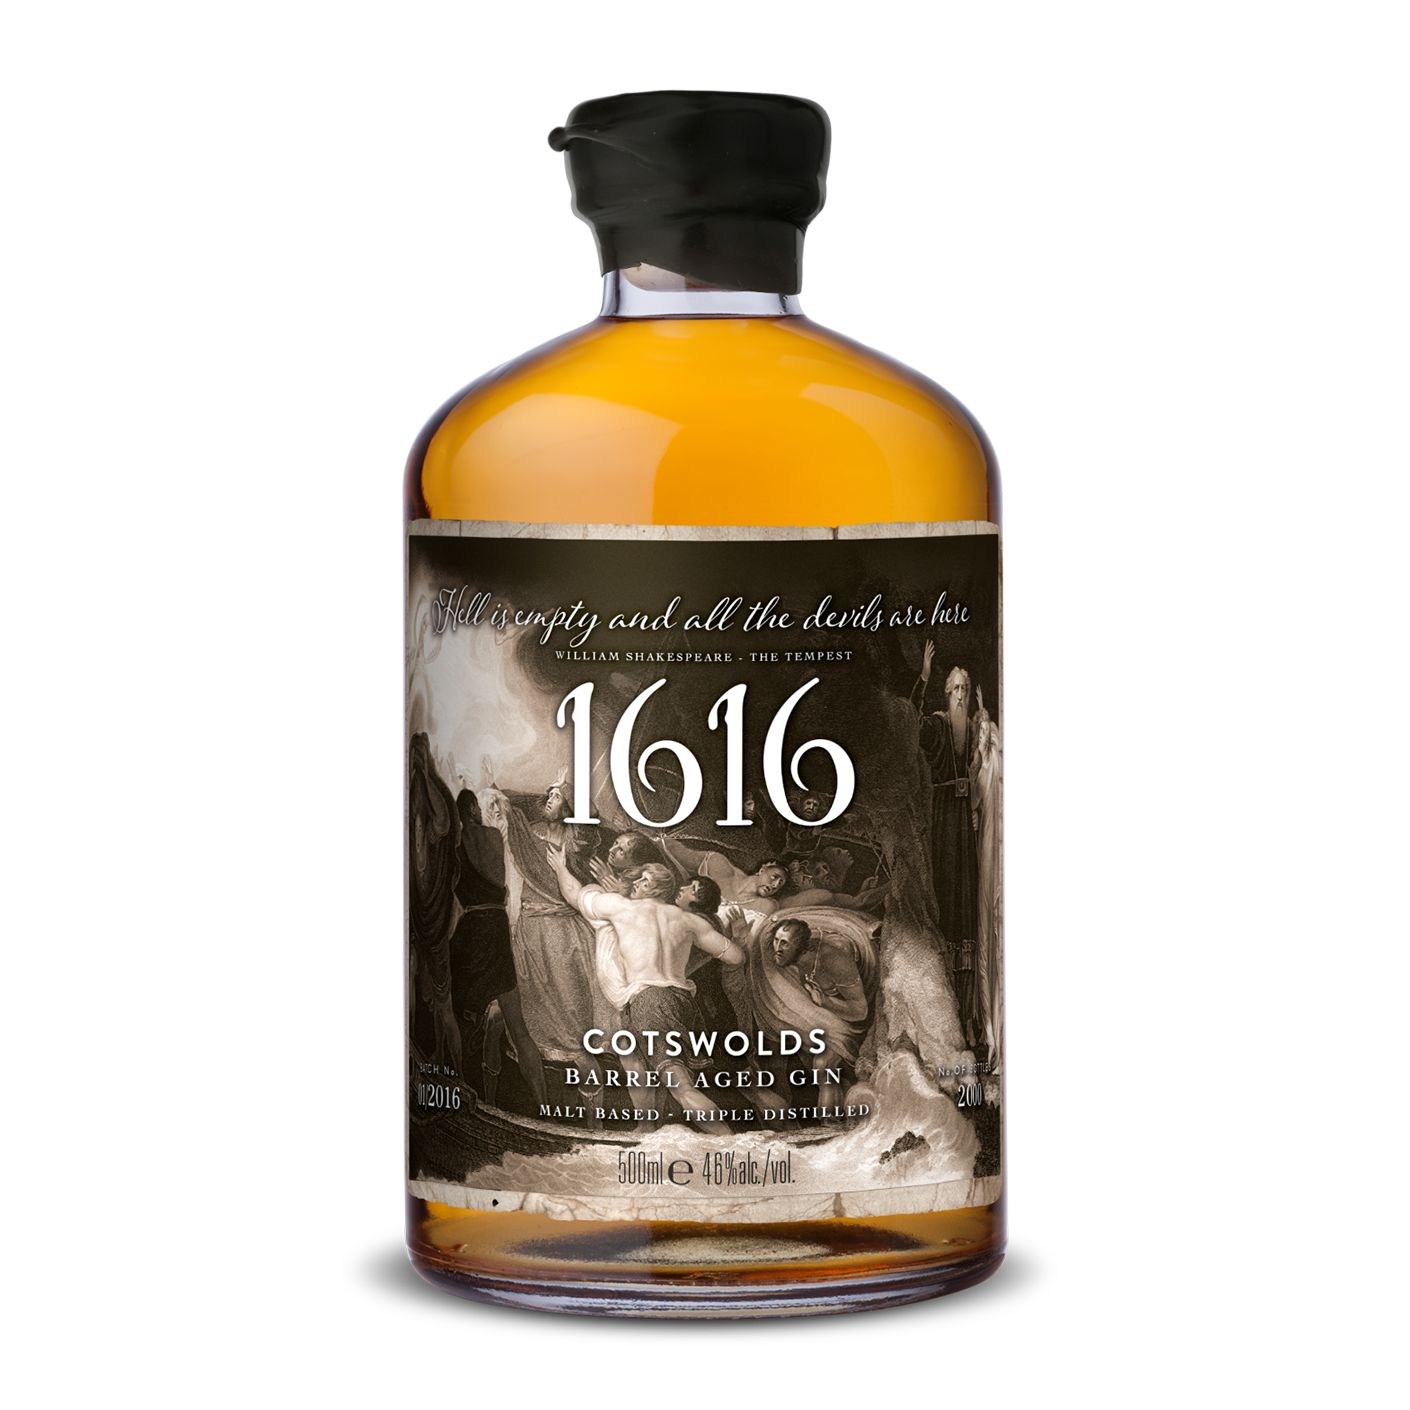 cotswolds 1616 barrel-aged gin bottle